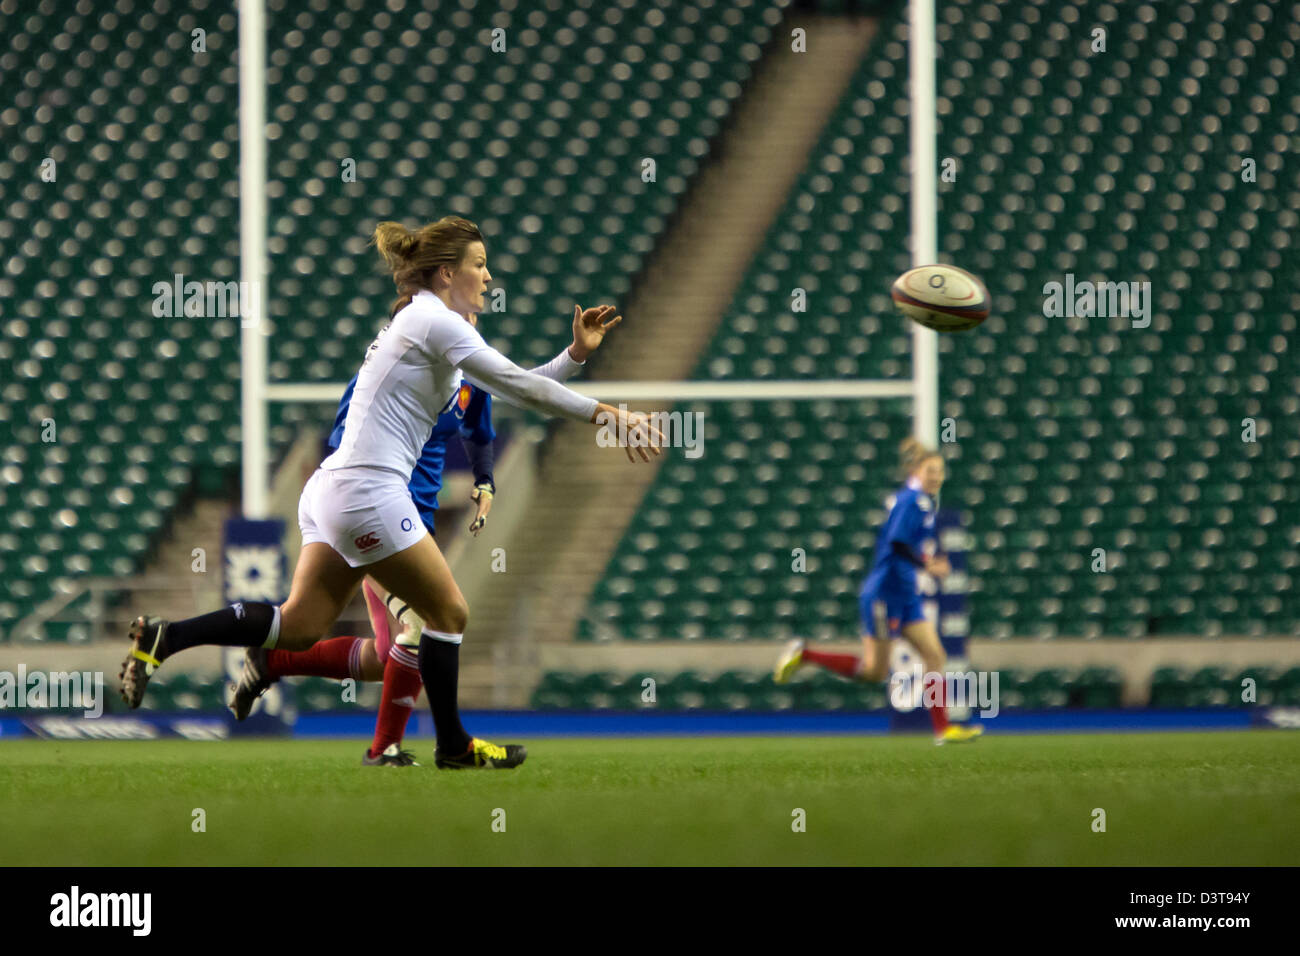 Abigail Chamberlain (Fra) passer la balle, 23.02.2013, London, England v France Women's Rugby Six Nations. Banque D'Images